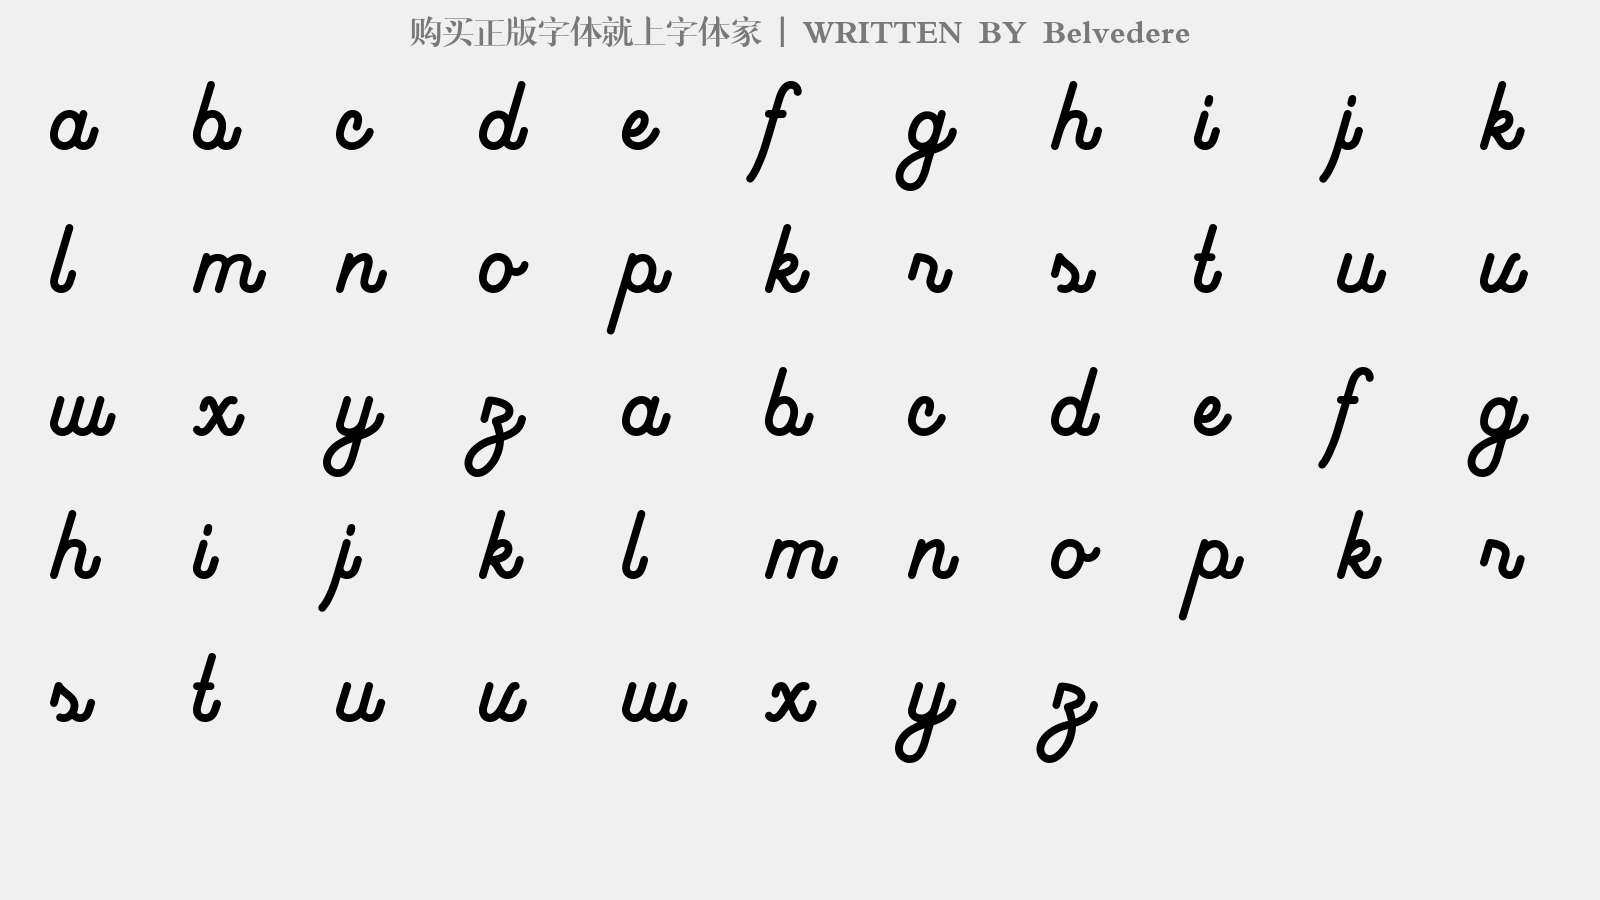 Belvedere - 大写字母/小写字母/数字